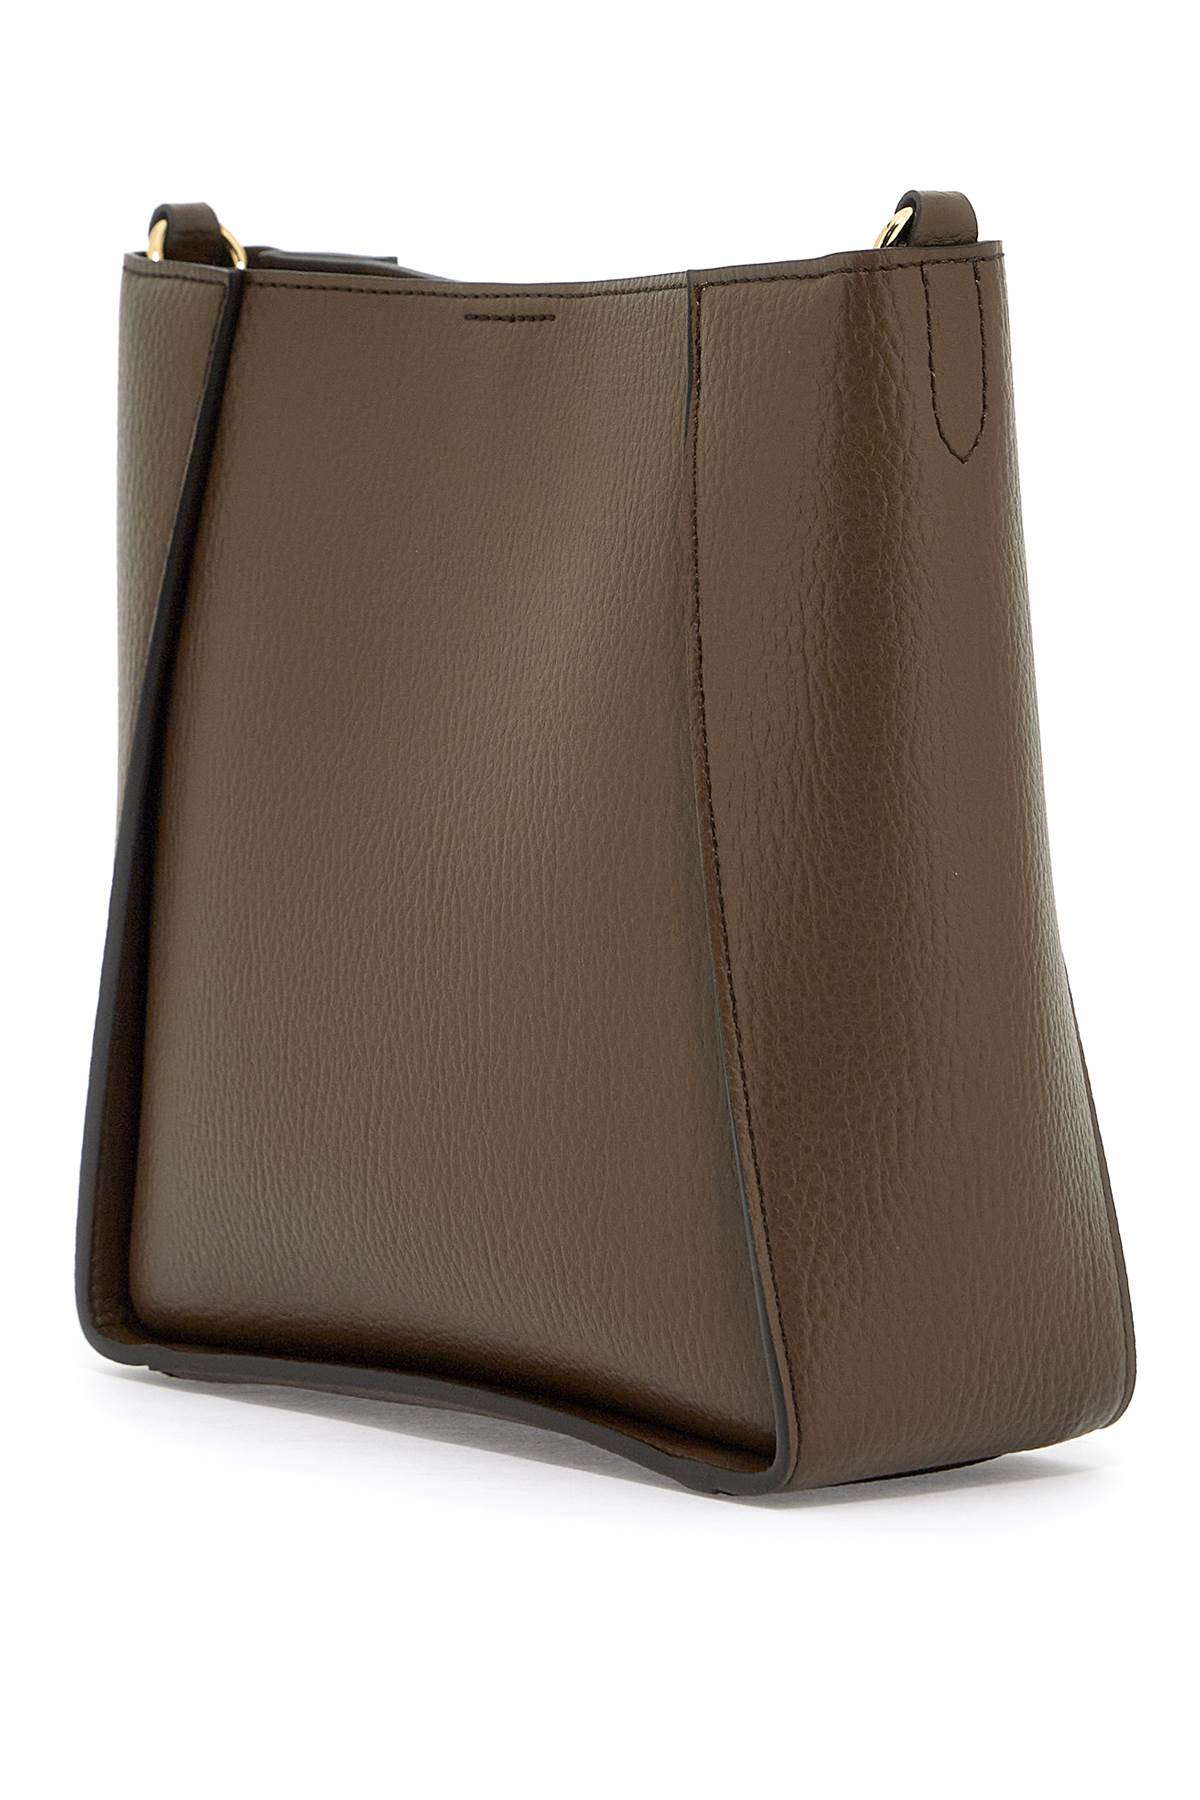 STELLA MCCARTNEY Brown Vegan Leather Crossbody Handbag for Women